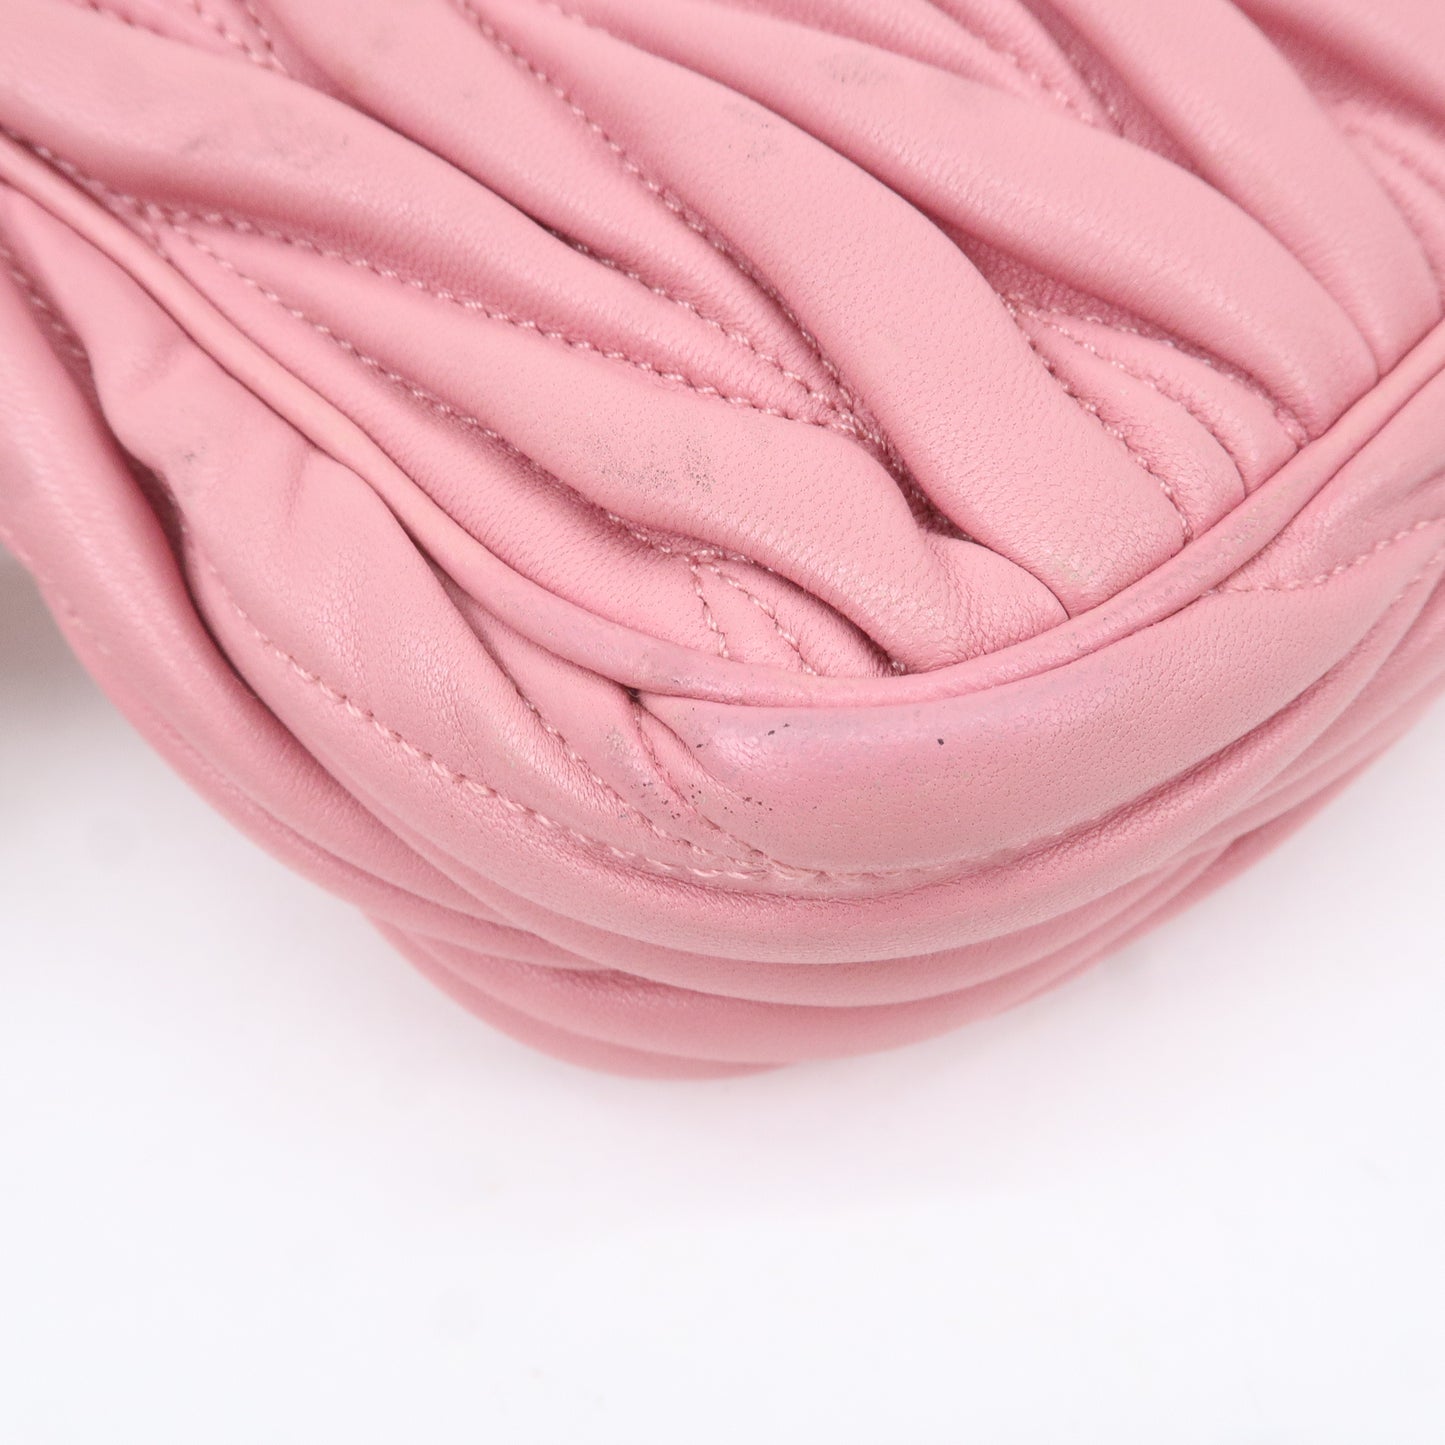 MIU MIU Logo Leather Shoulder Bag Hand Bag Pink Gold